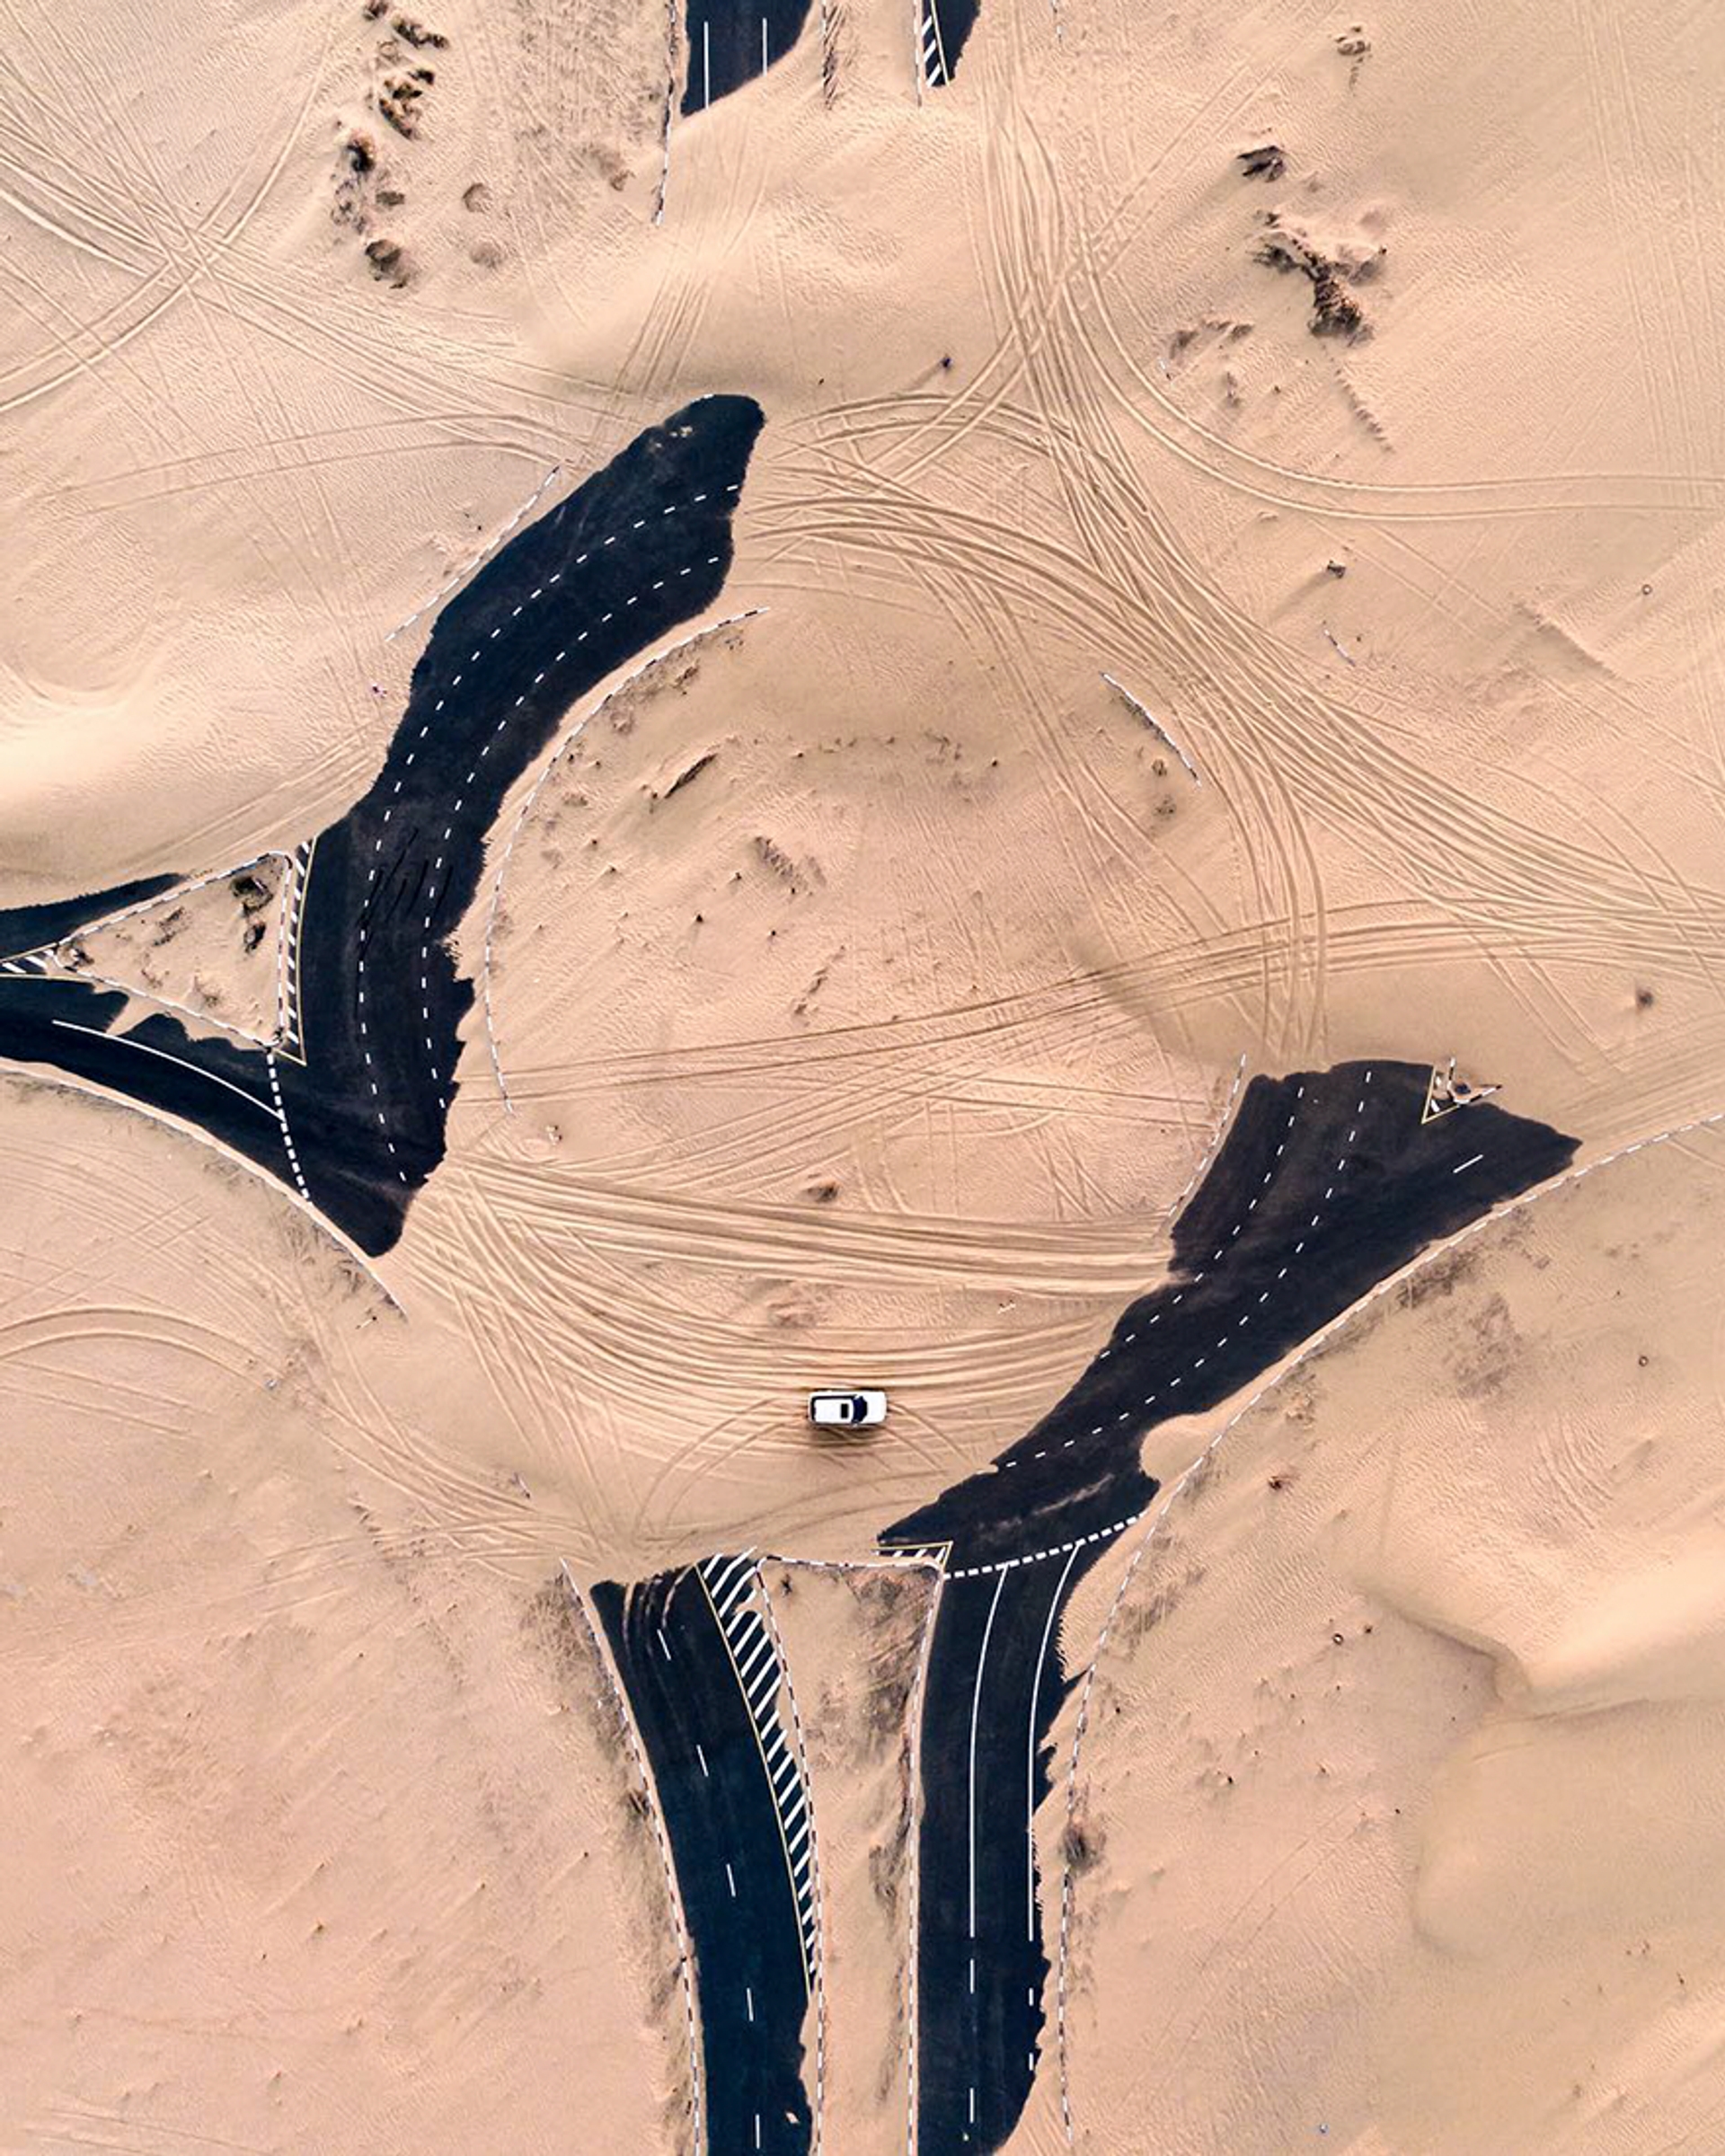 amazing-desert-aerial-photography-irenaeus-herok-21